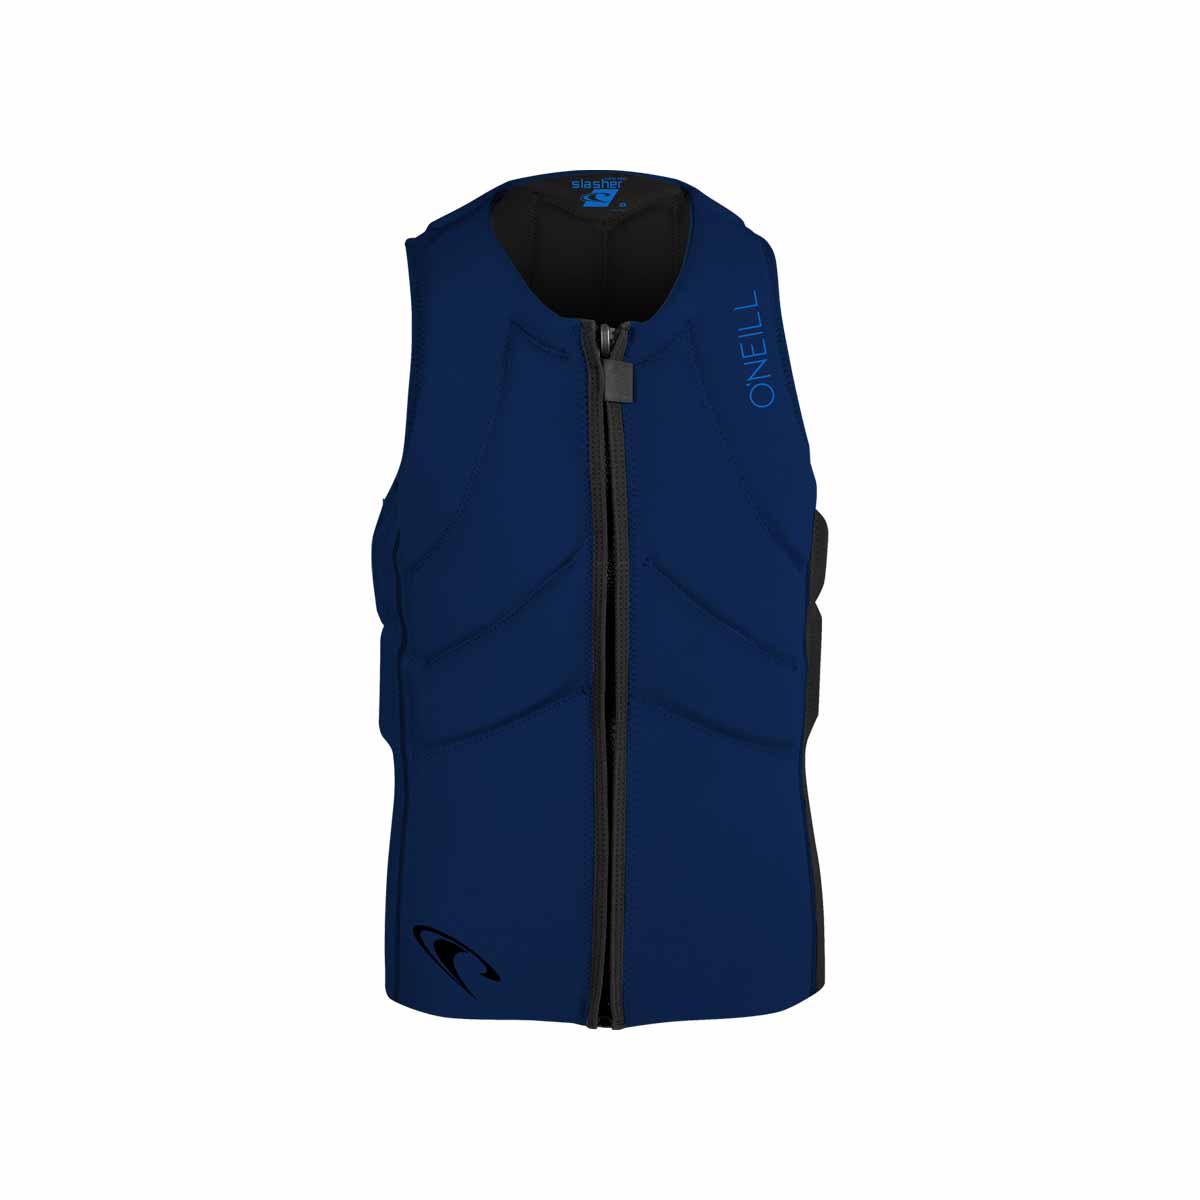 O'Neill Slasher Waist Harness Vest – Navy/Black E75